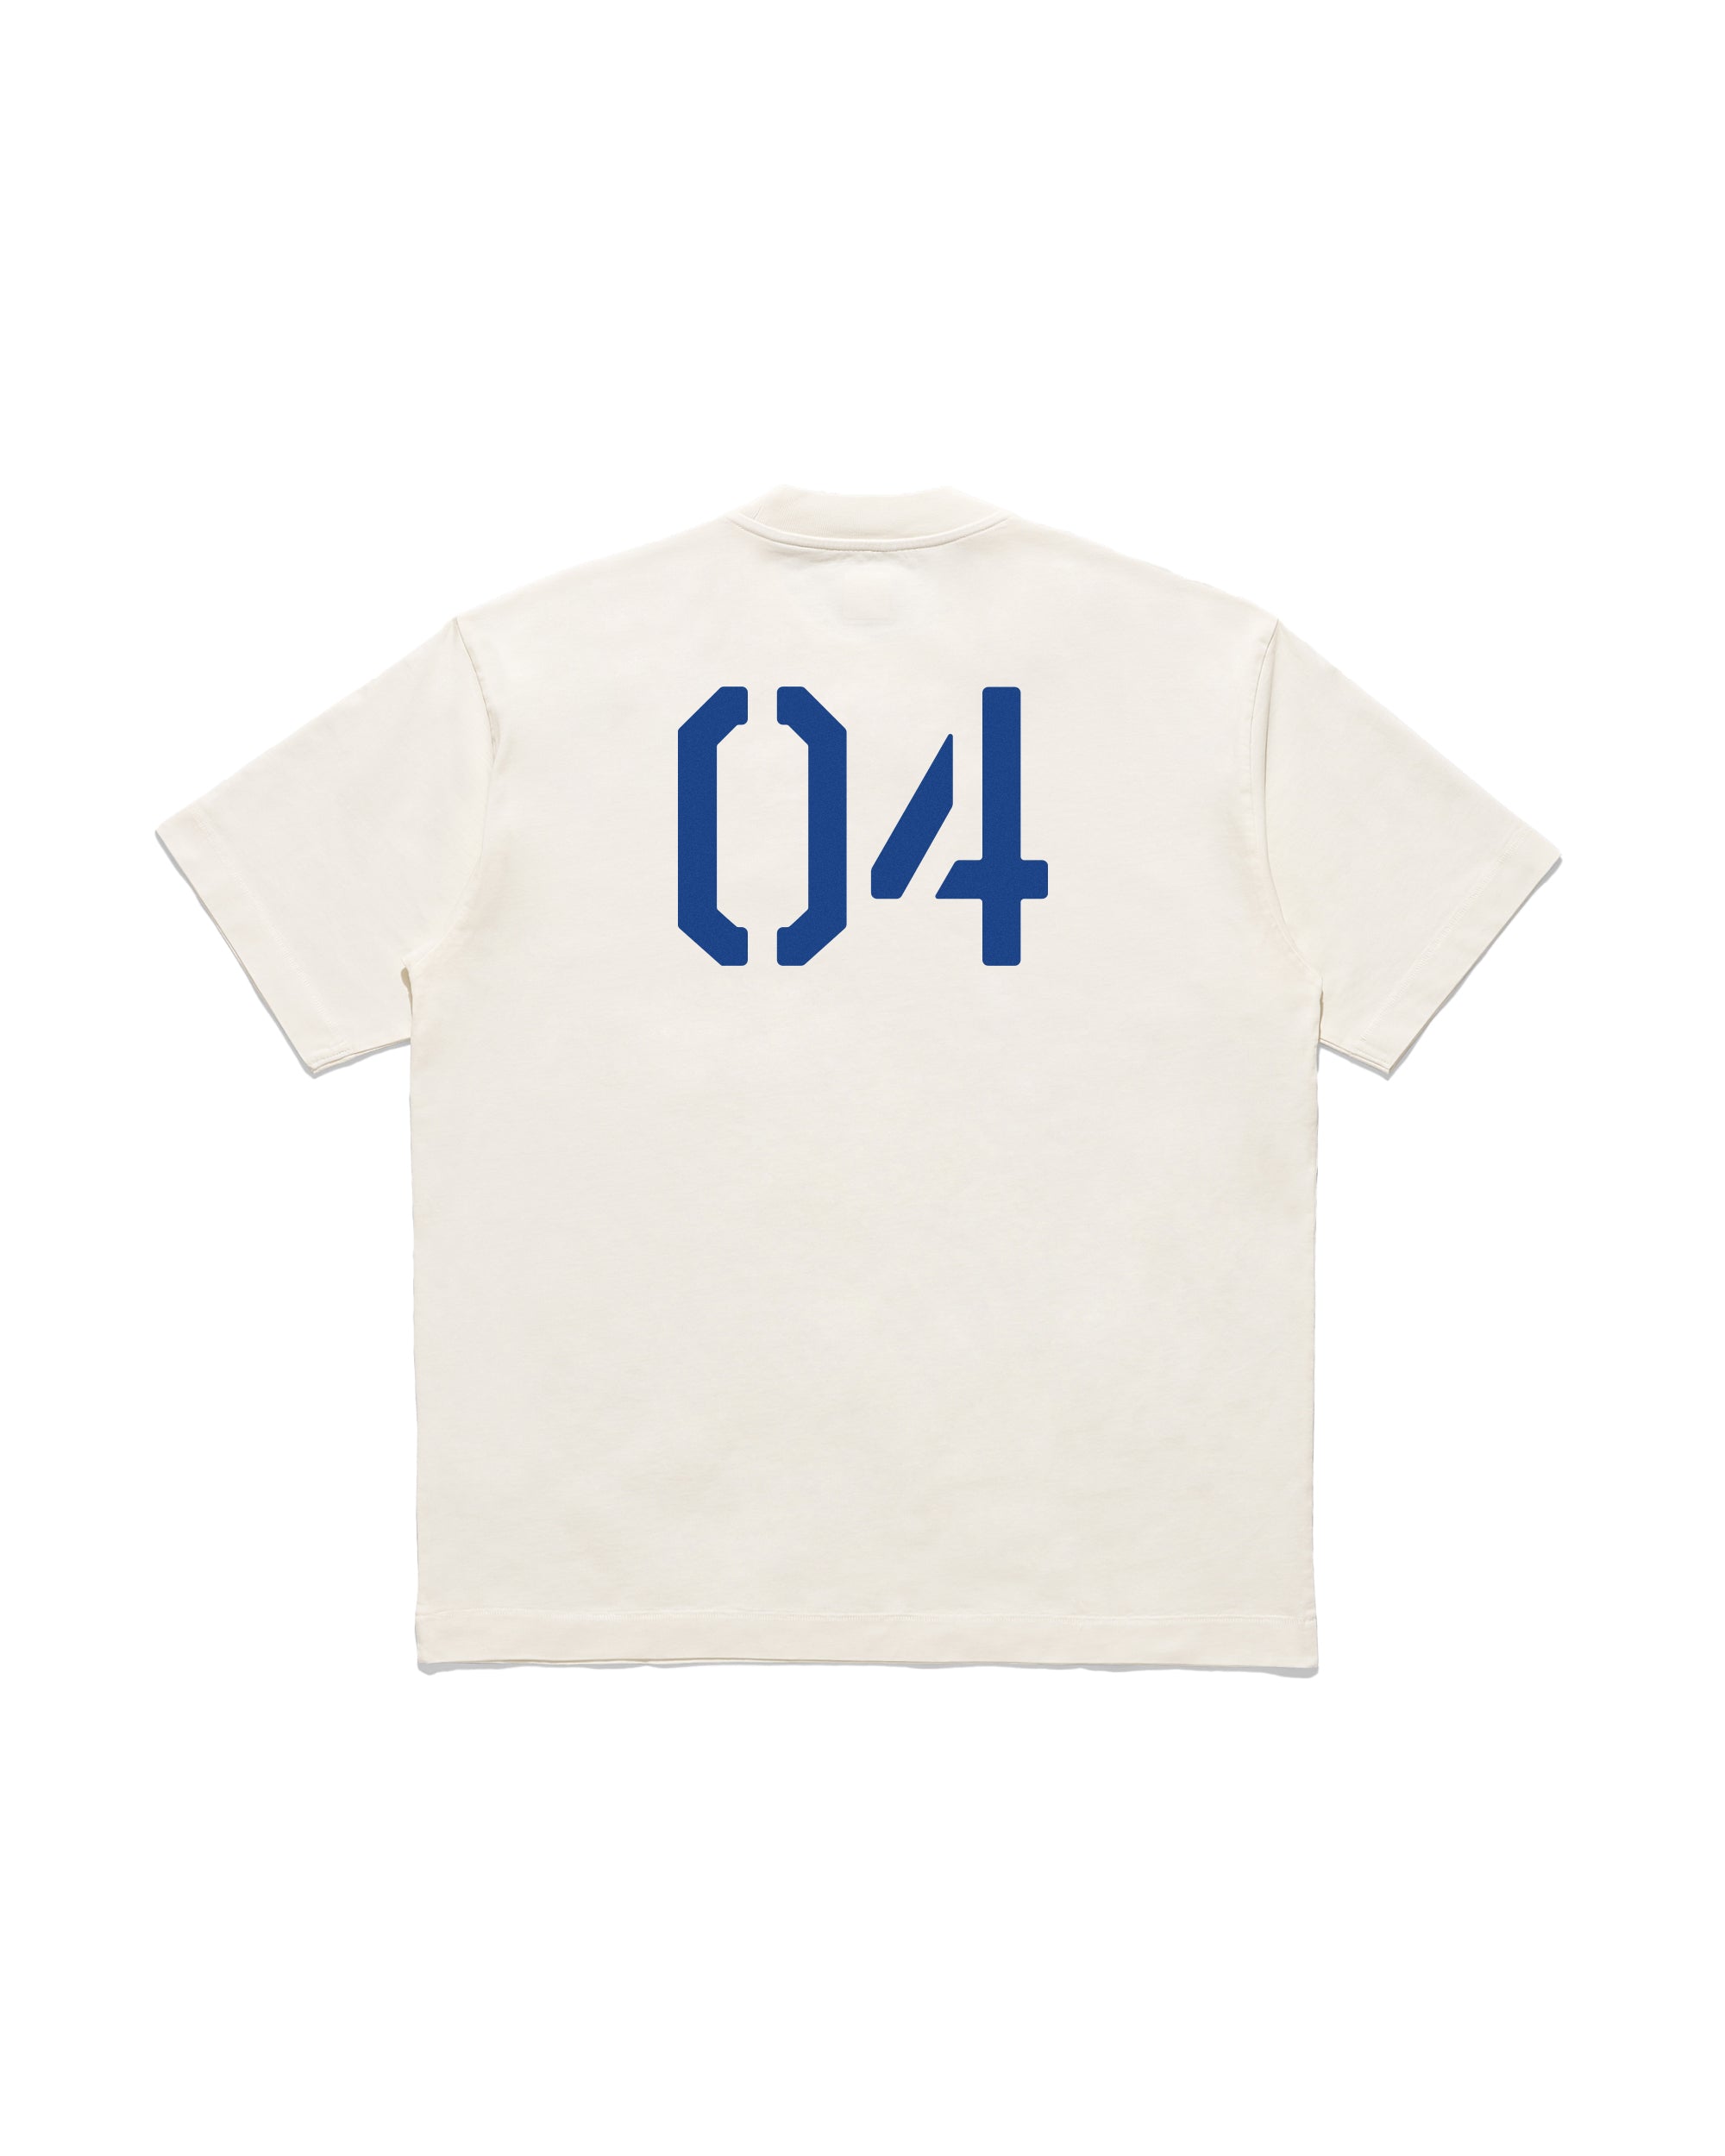 Season 04 T-Shirt - Off White